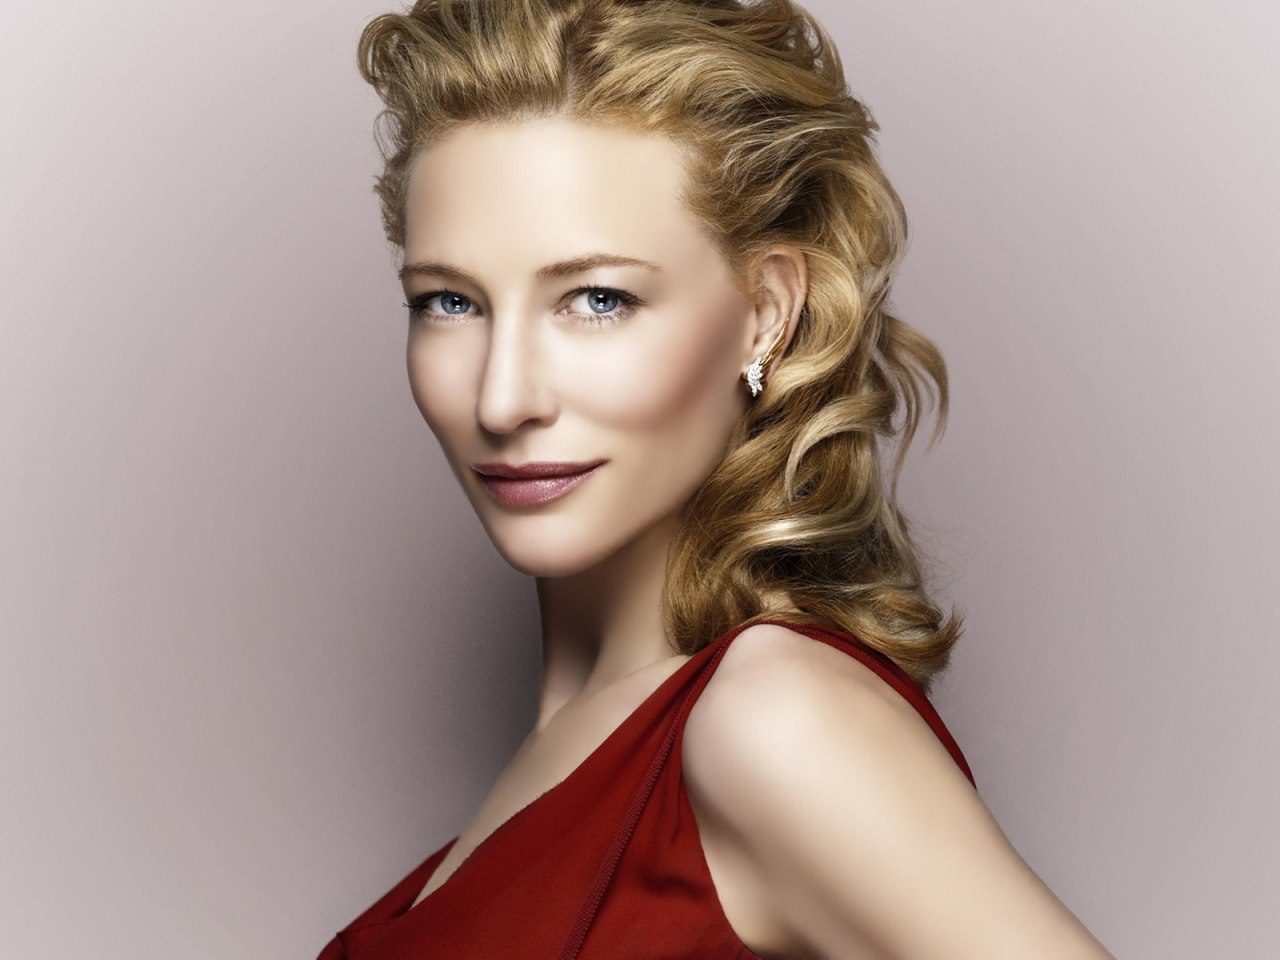 Cate Blanchett for 1280 x 960 resolution